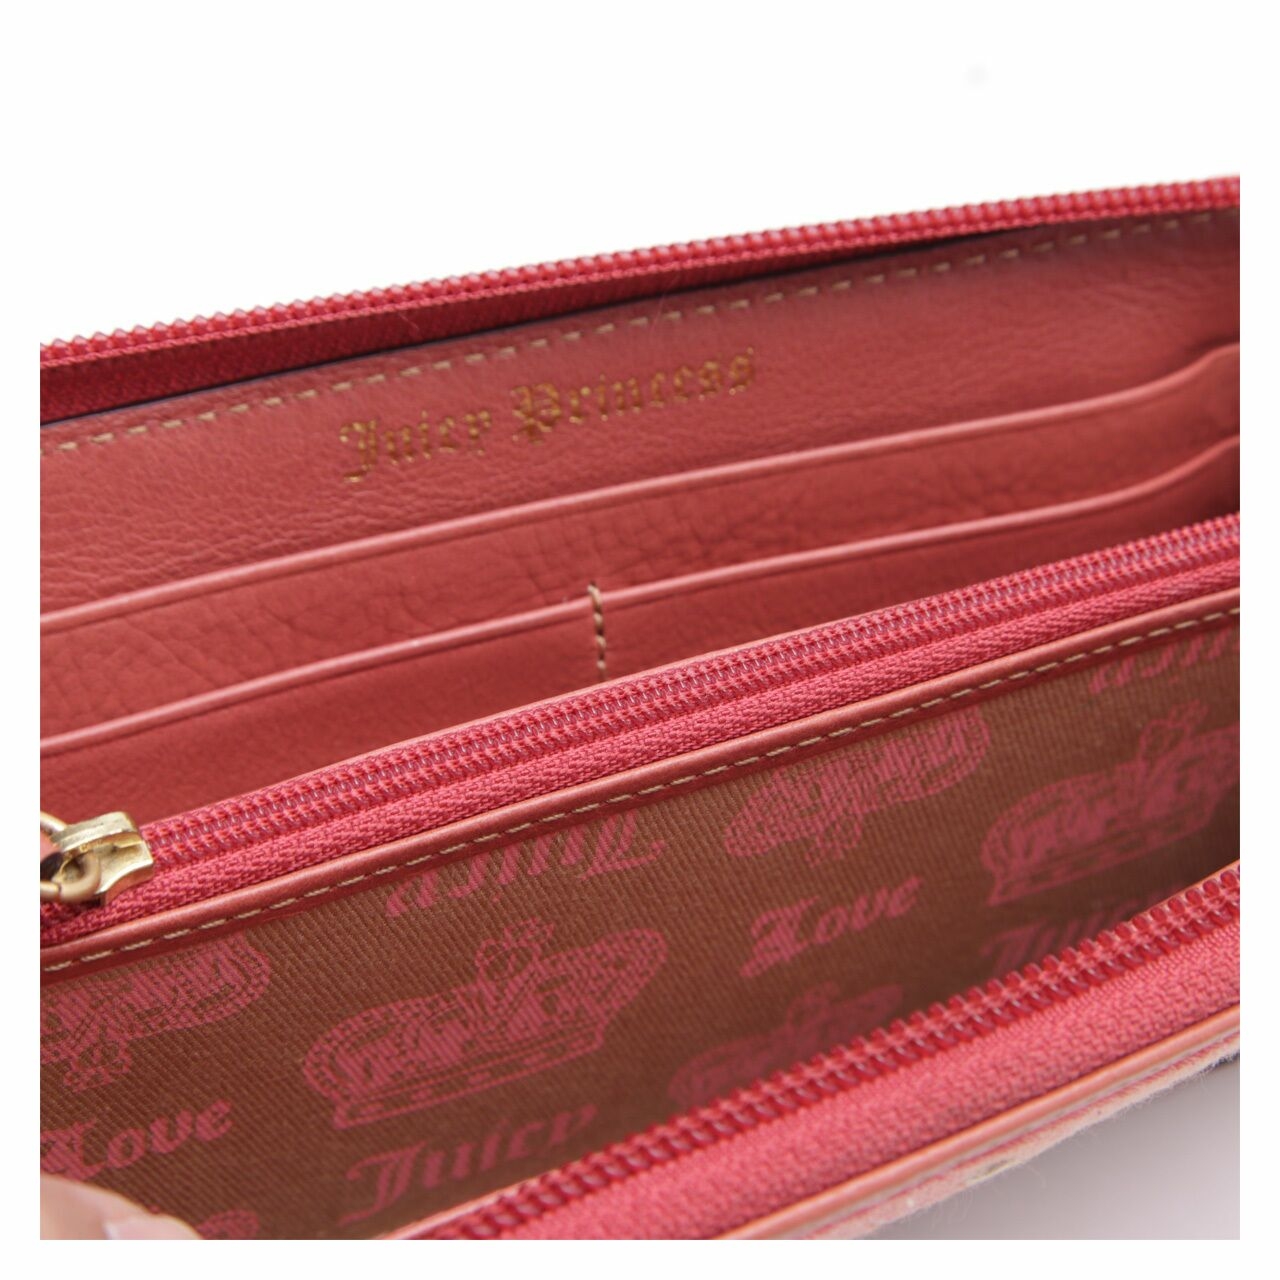 Juicy Couture Pink Wallet